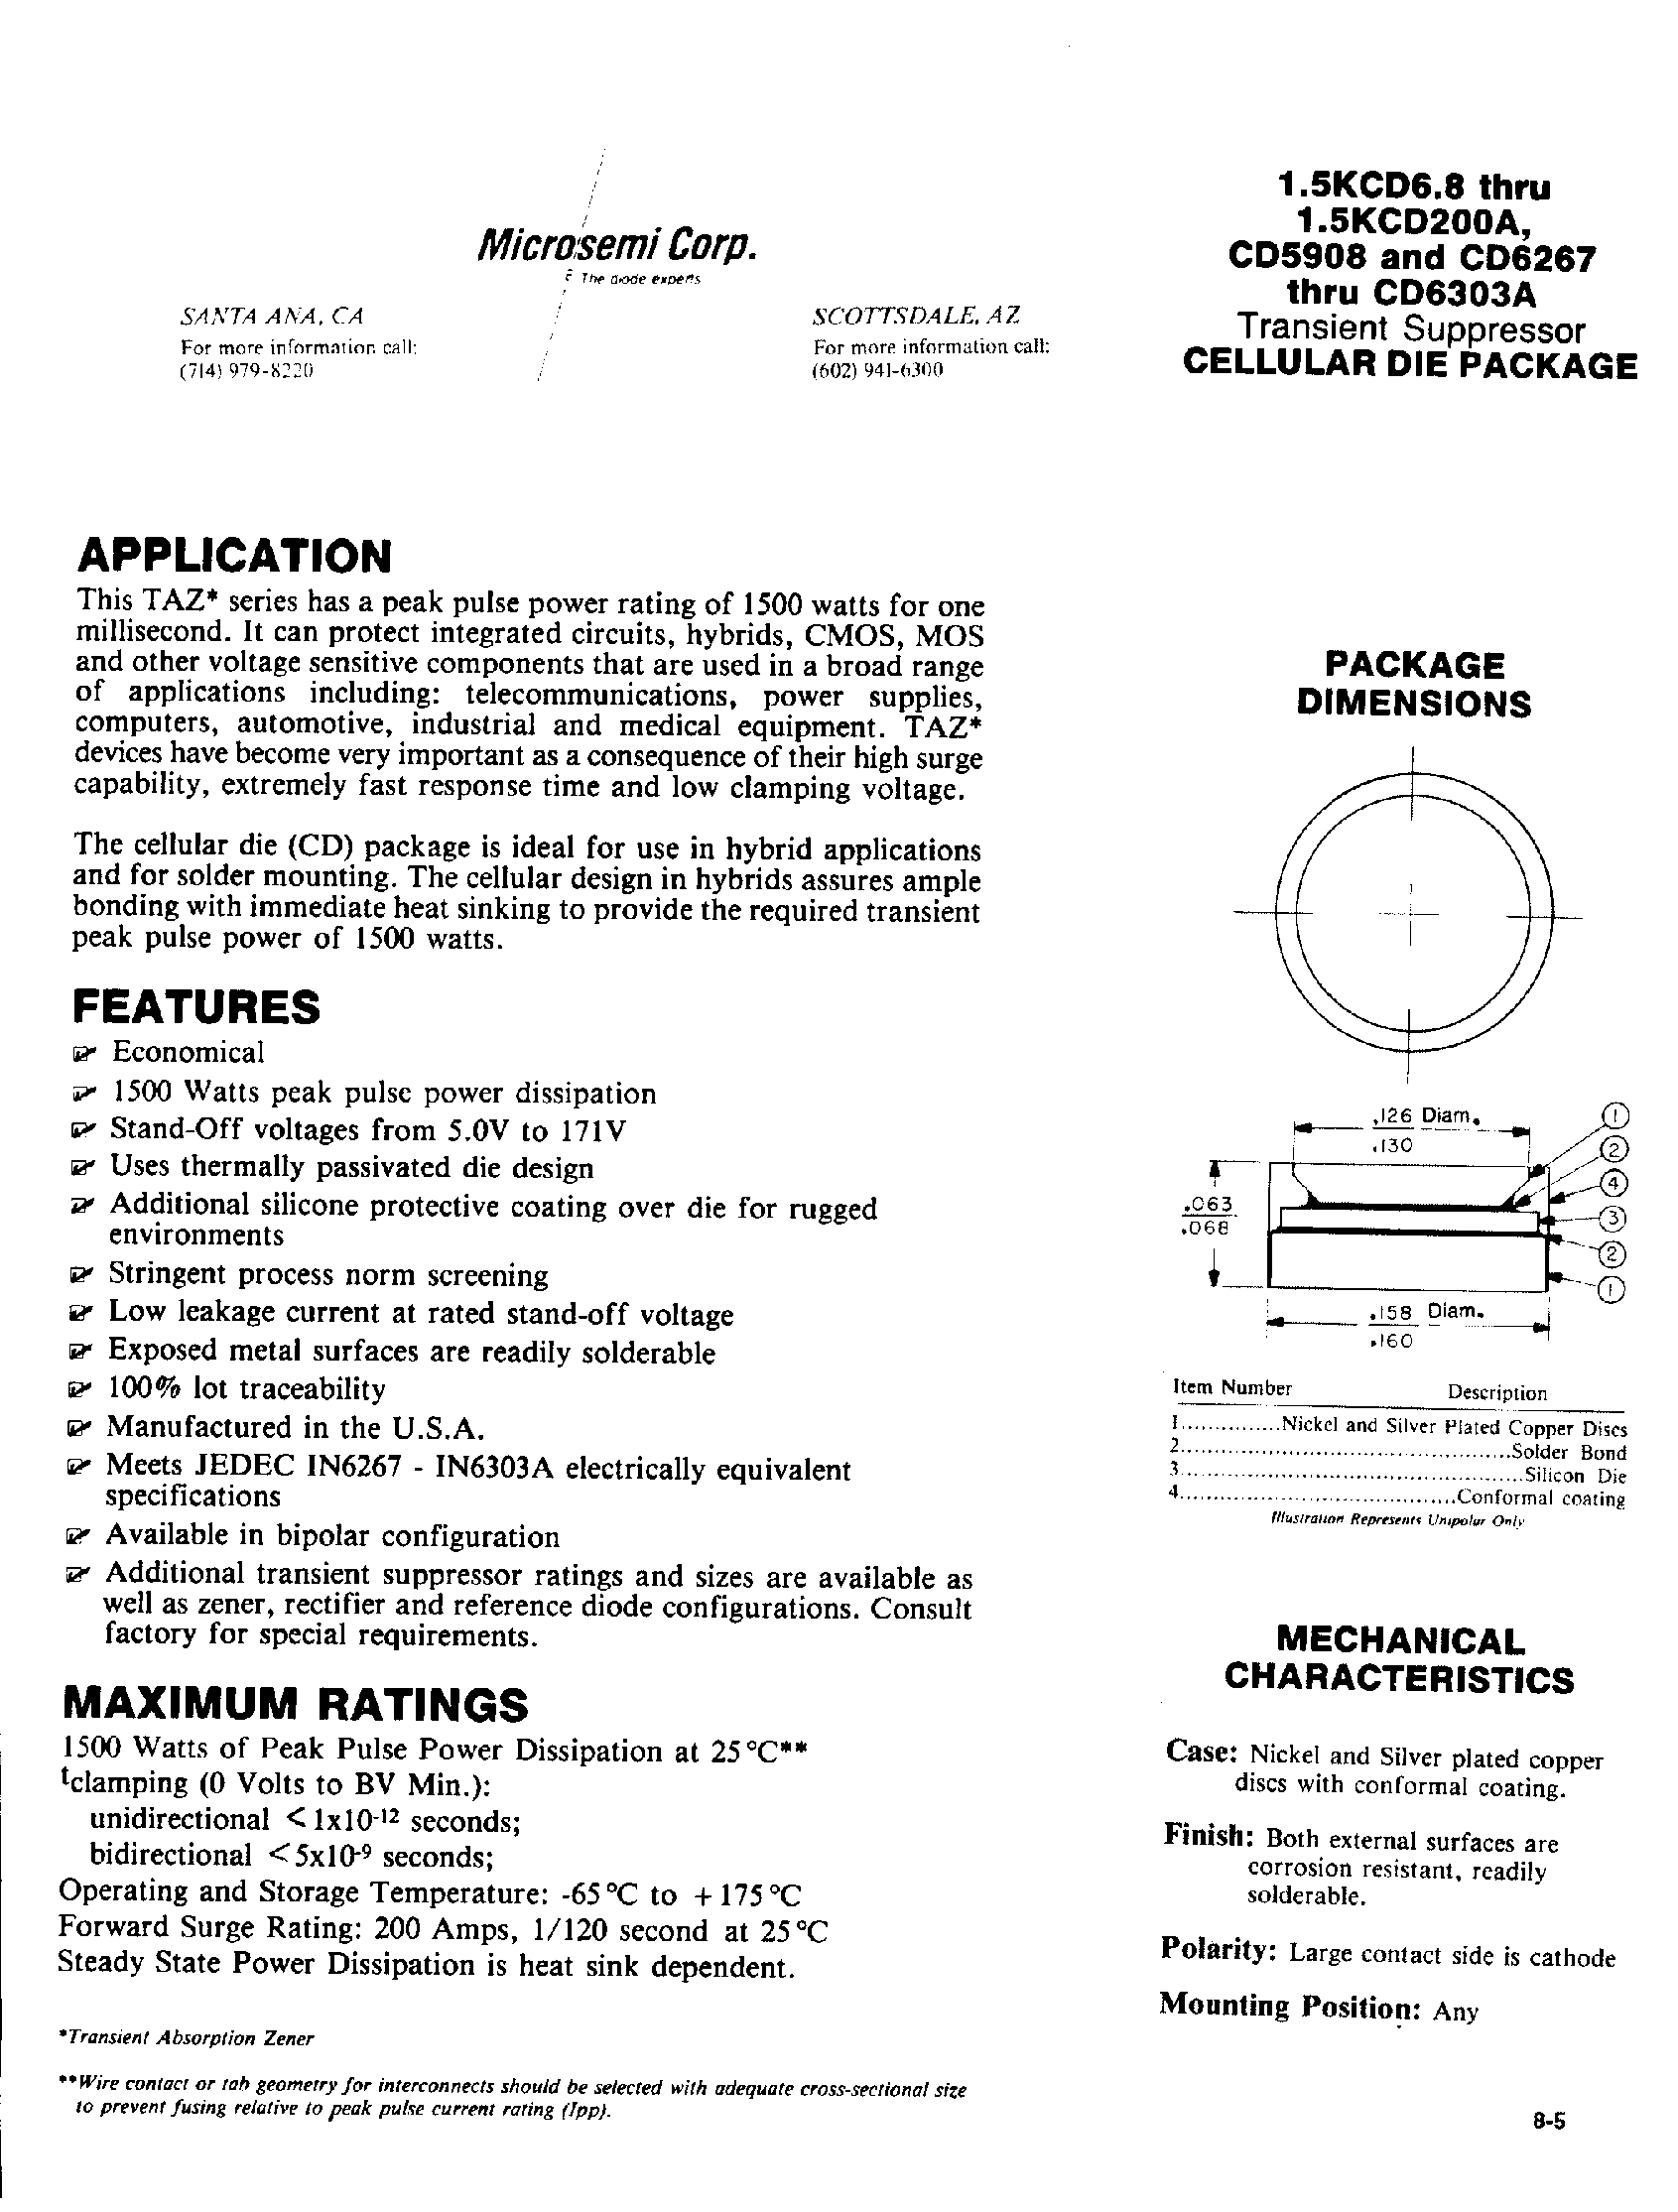 Datasheet CD6298 - Transient suppressor CELLULAR DIE PACKAGE page 1